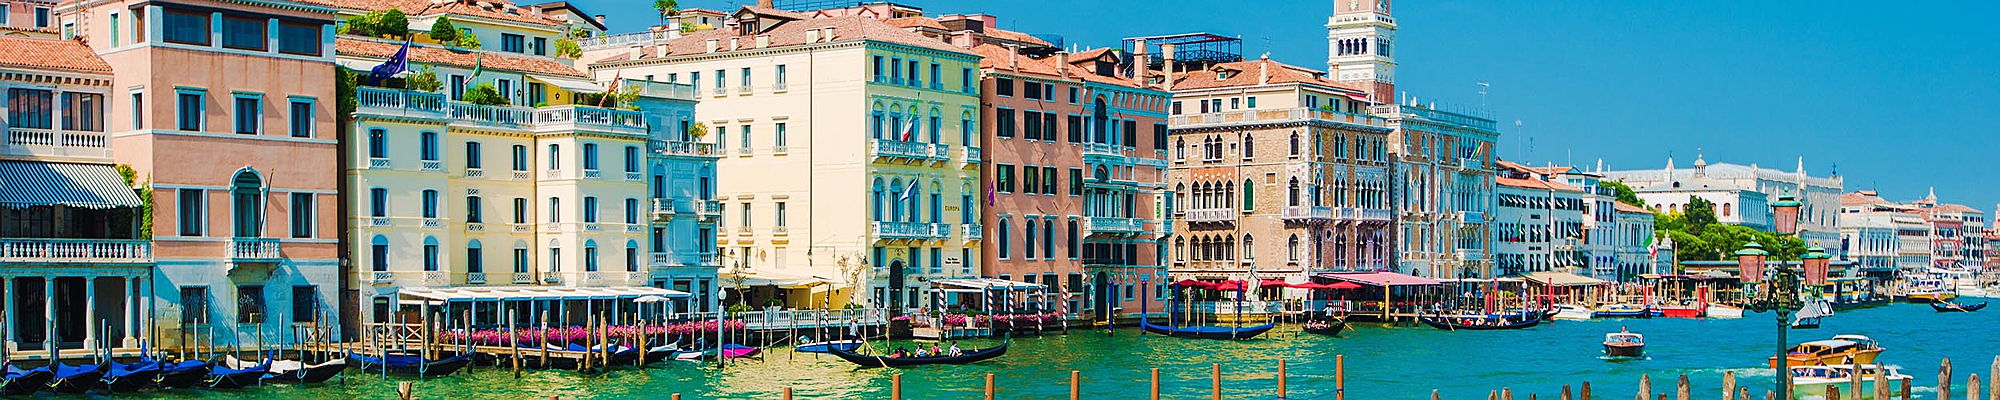  Venezia
- Bilocali in vendita a Venezia